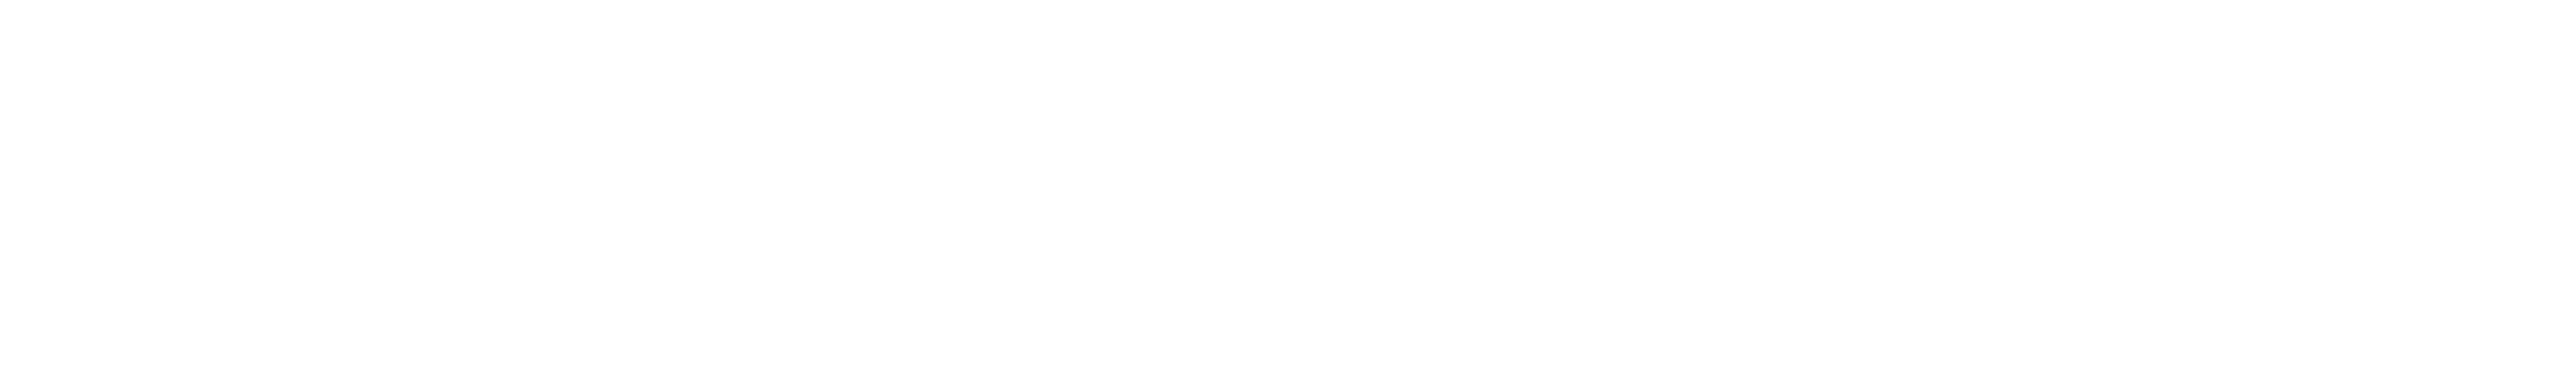 CBS Leadership Pipeline Challenge